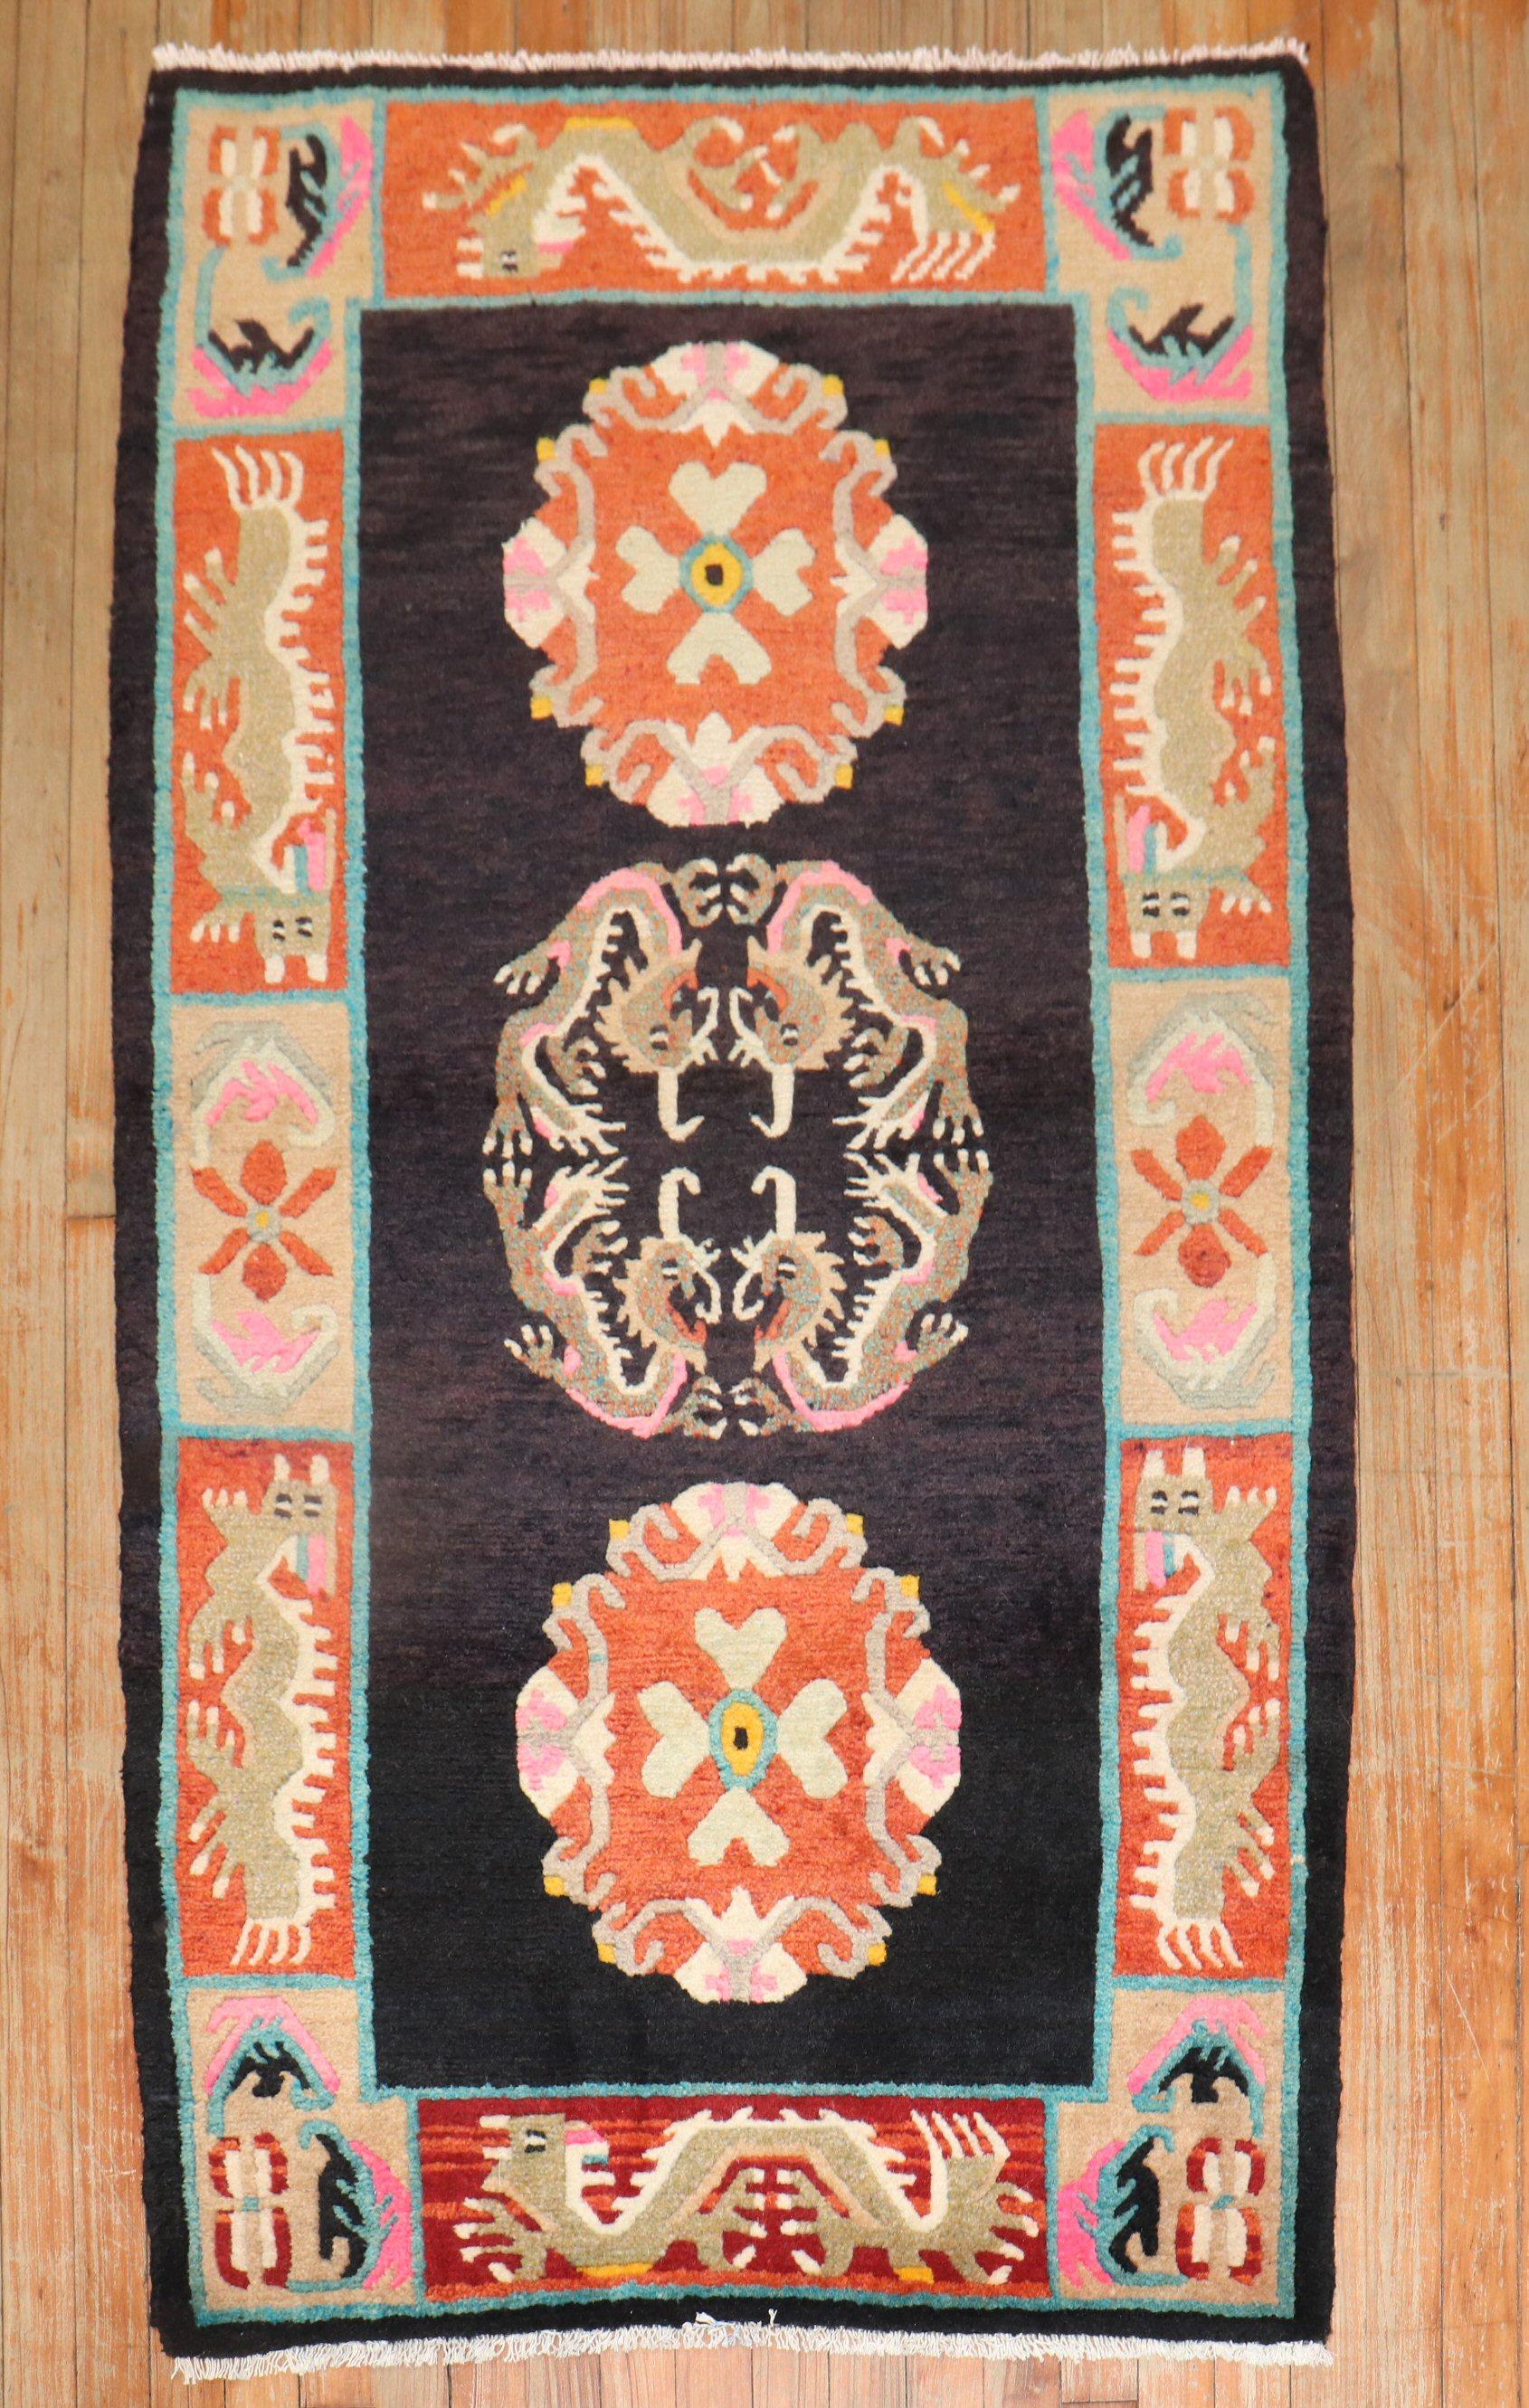 Colorful late 20th century Tibetan rug

Measures: 3'1